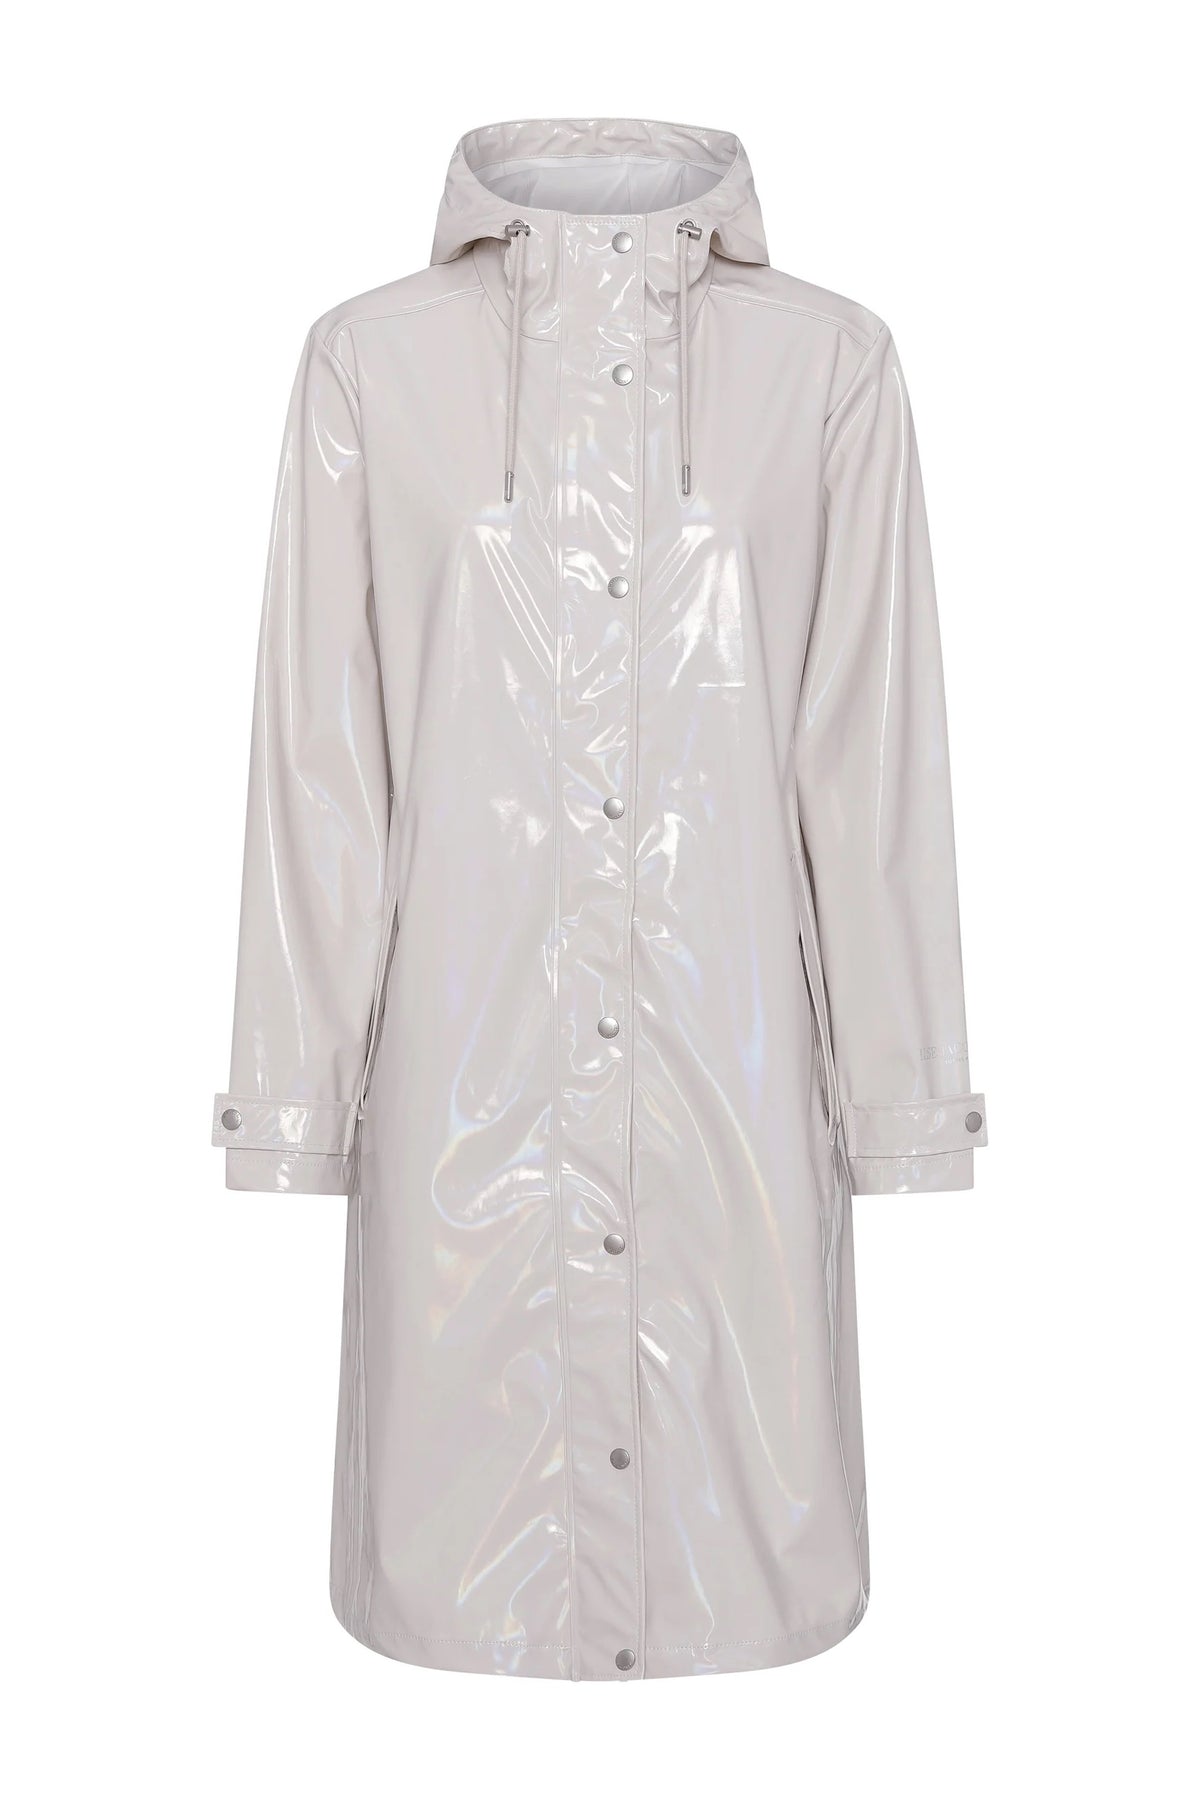 Ilse Jacobsen White Gloss Raincoat – Coco Shoes Tasmania